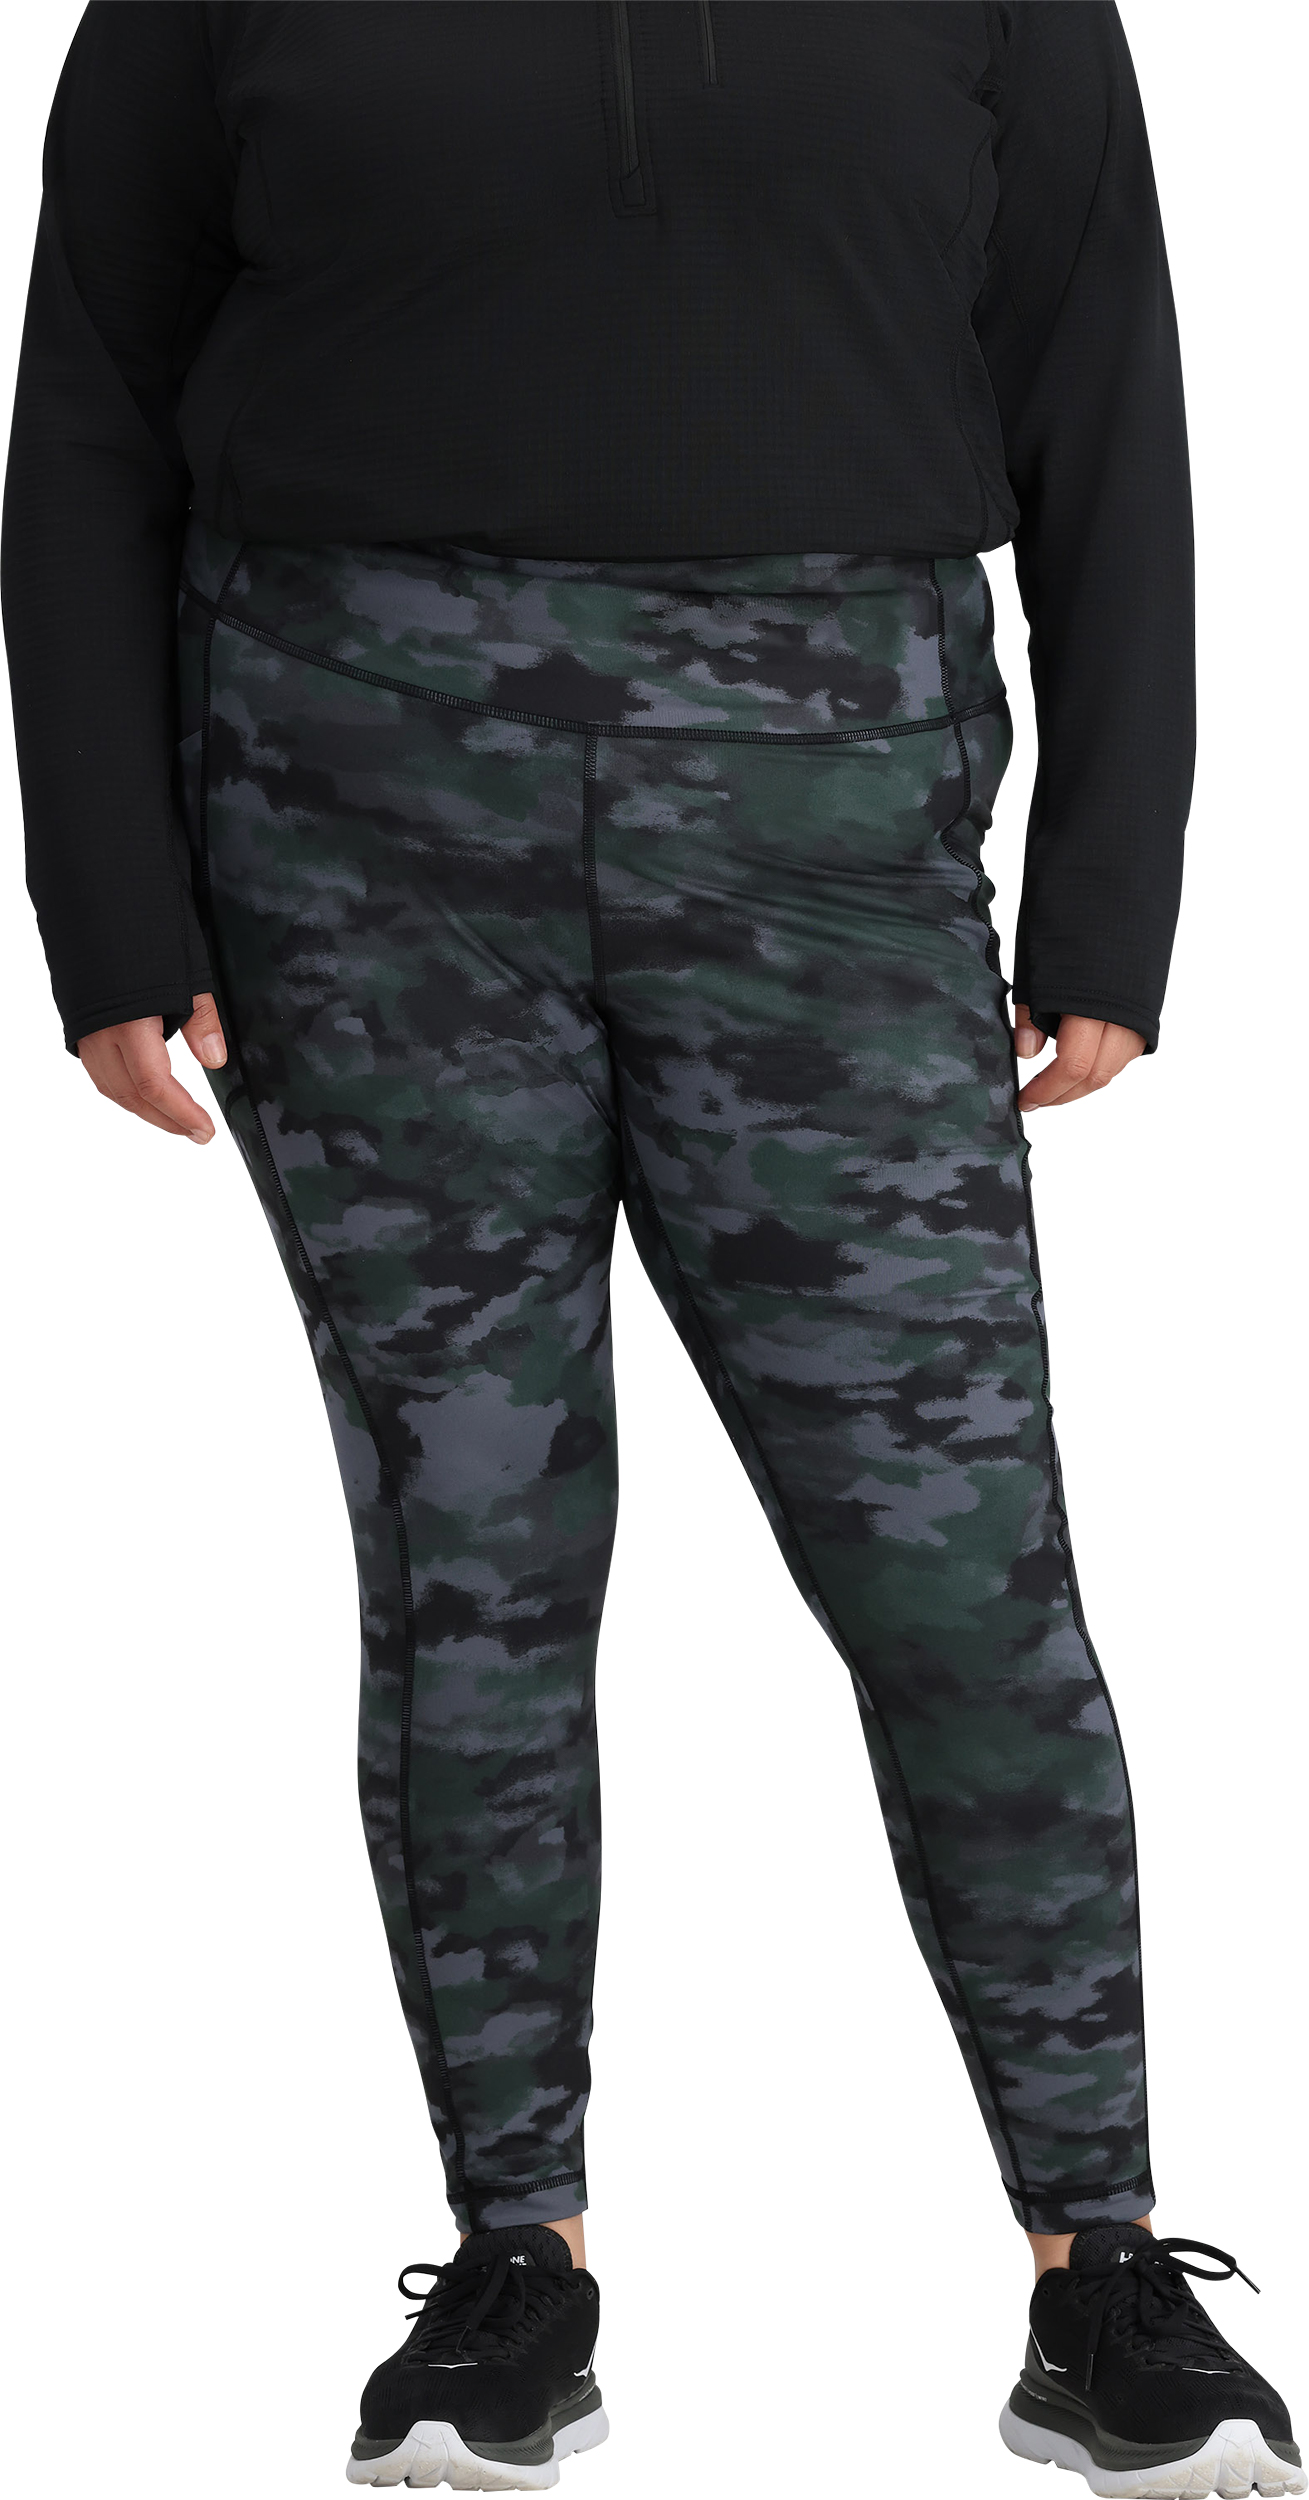 Women’s lululemon camo leggings size 10 with pocket on the side